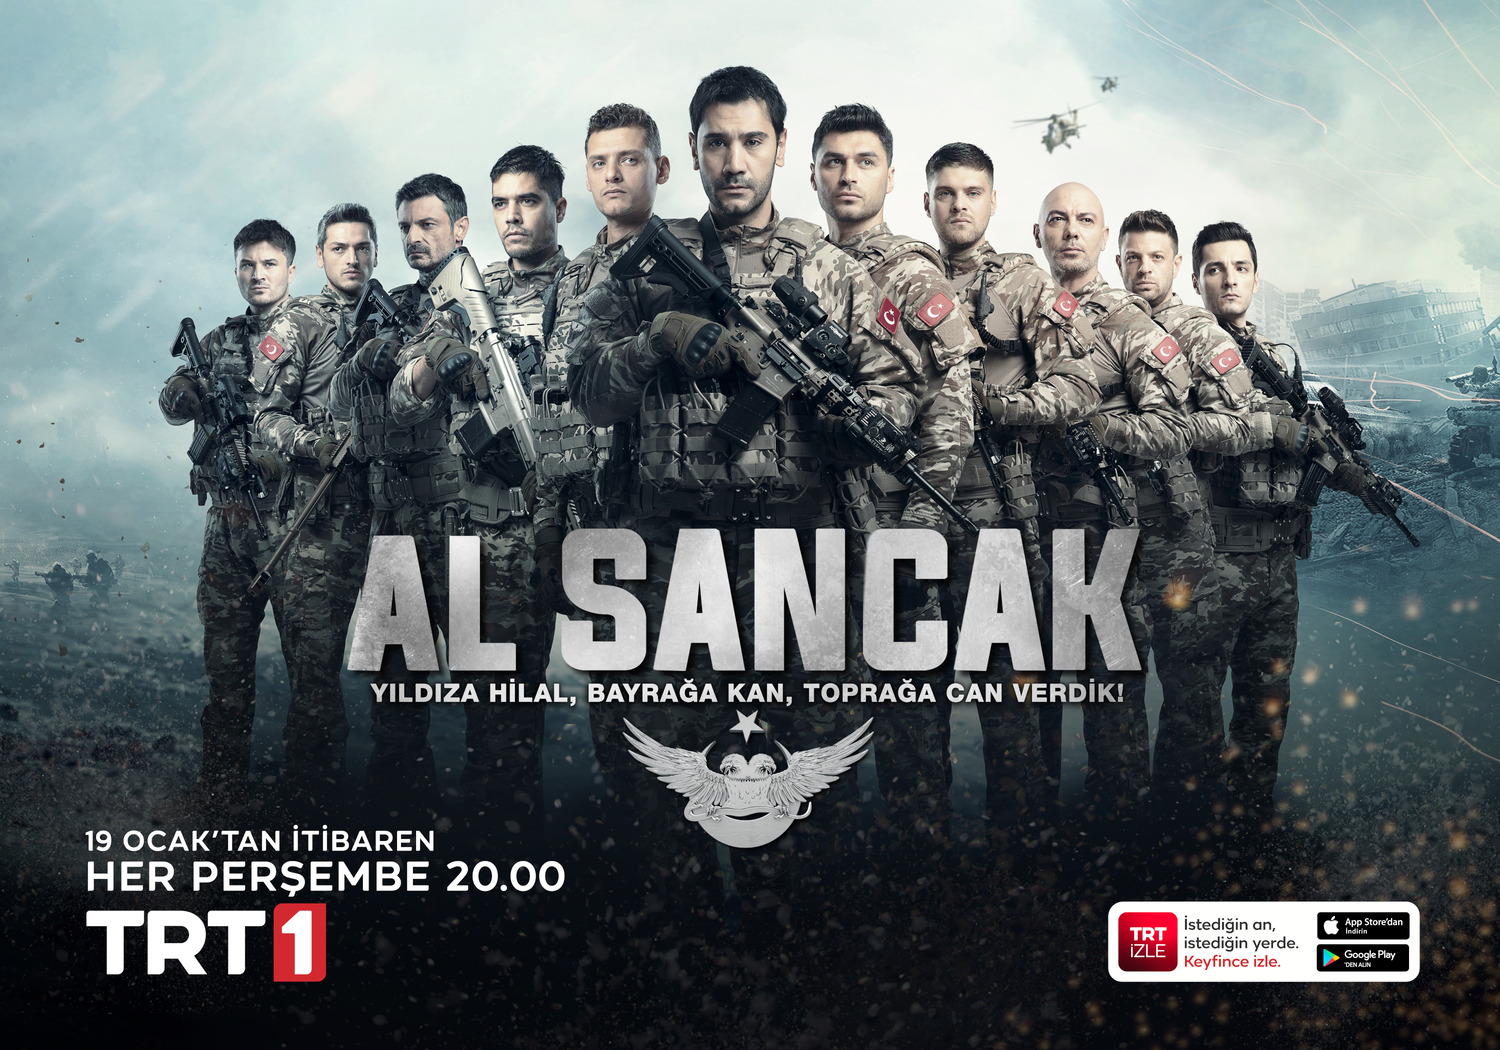 Extra Large TV Poster Image for Al Sancak (#6 of 20)